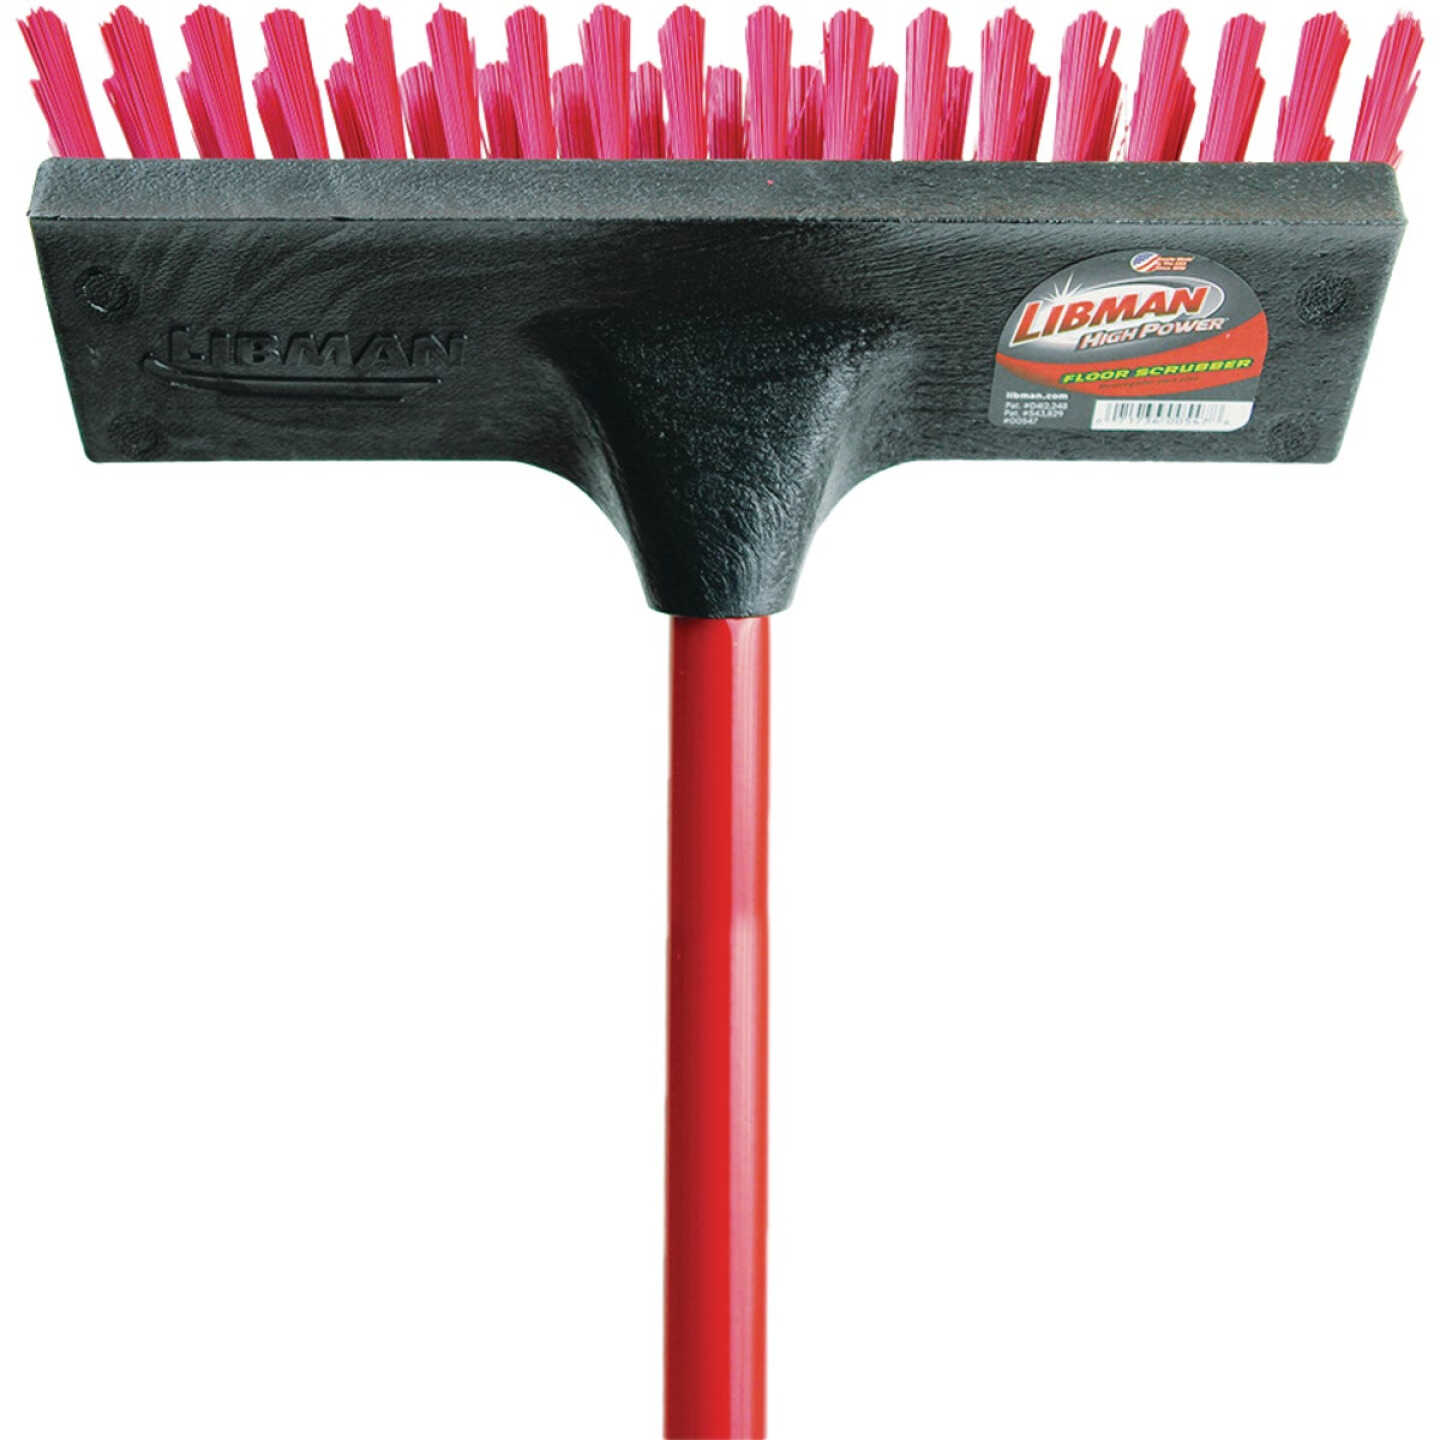 Libman Power Scrub Brush (Pack of 3)